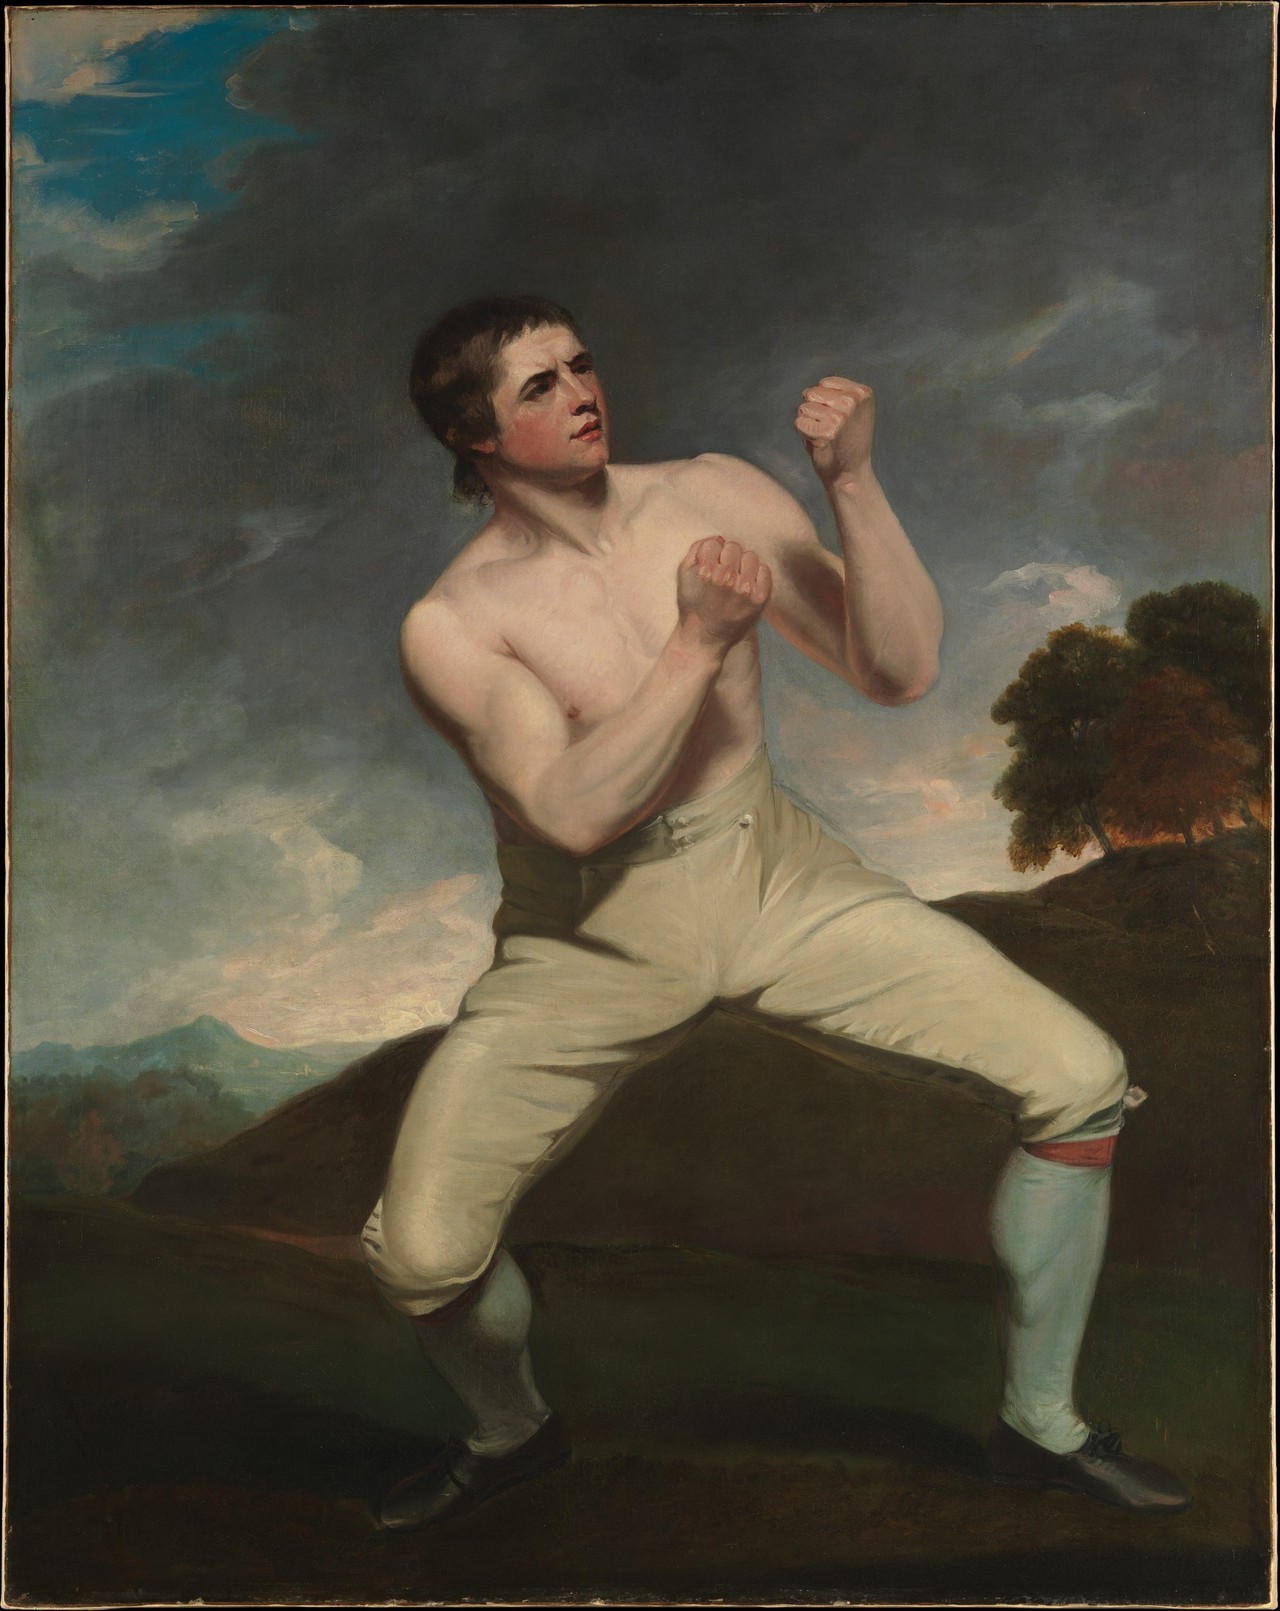 privatecabinetstuff:
“ John Hoppner
Richard Humphreys the Boxer (1788)
The MET, N.Y.
”